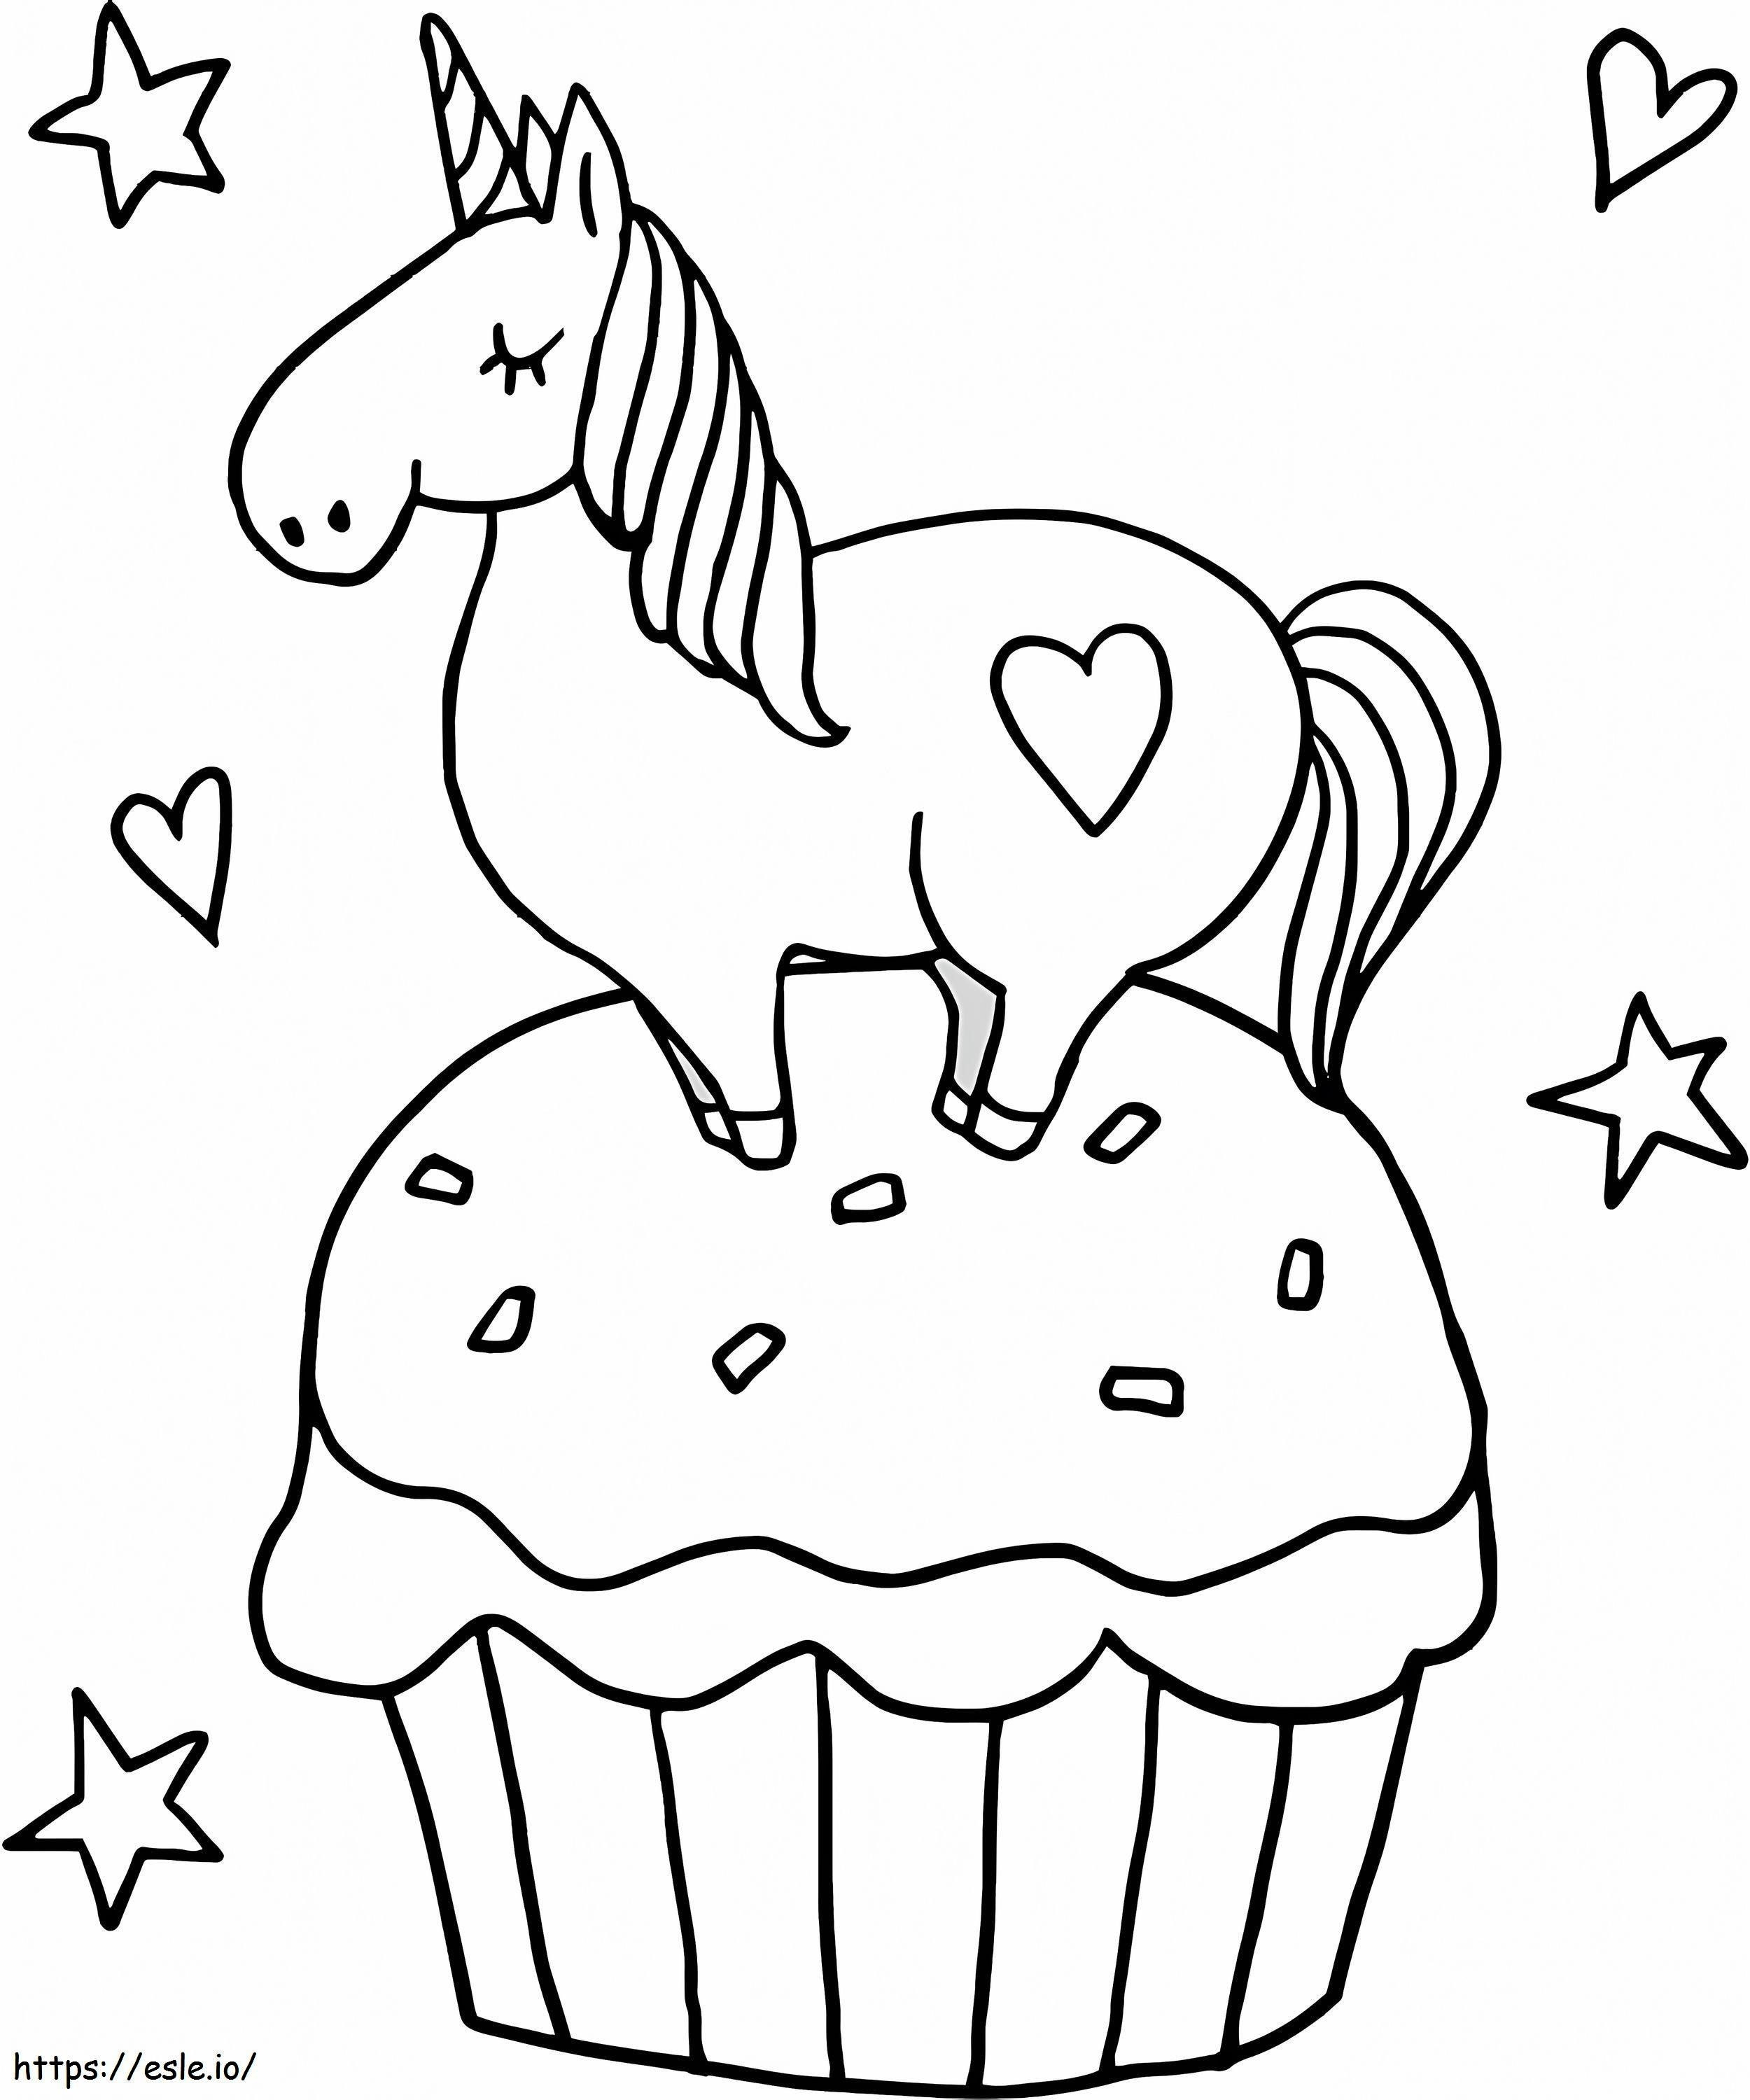 1563326262 Unicorn Kecil Di Cupcake A4 Gambar Mewarnai